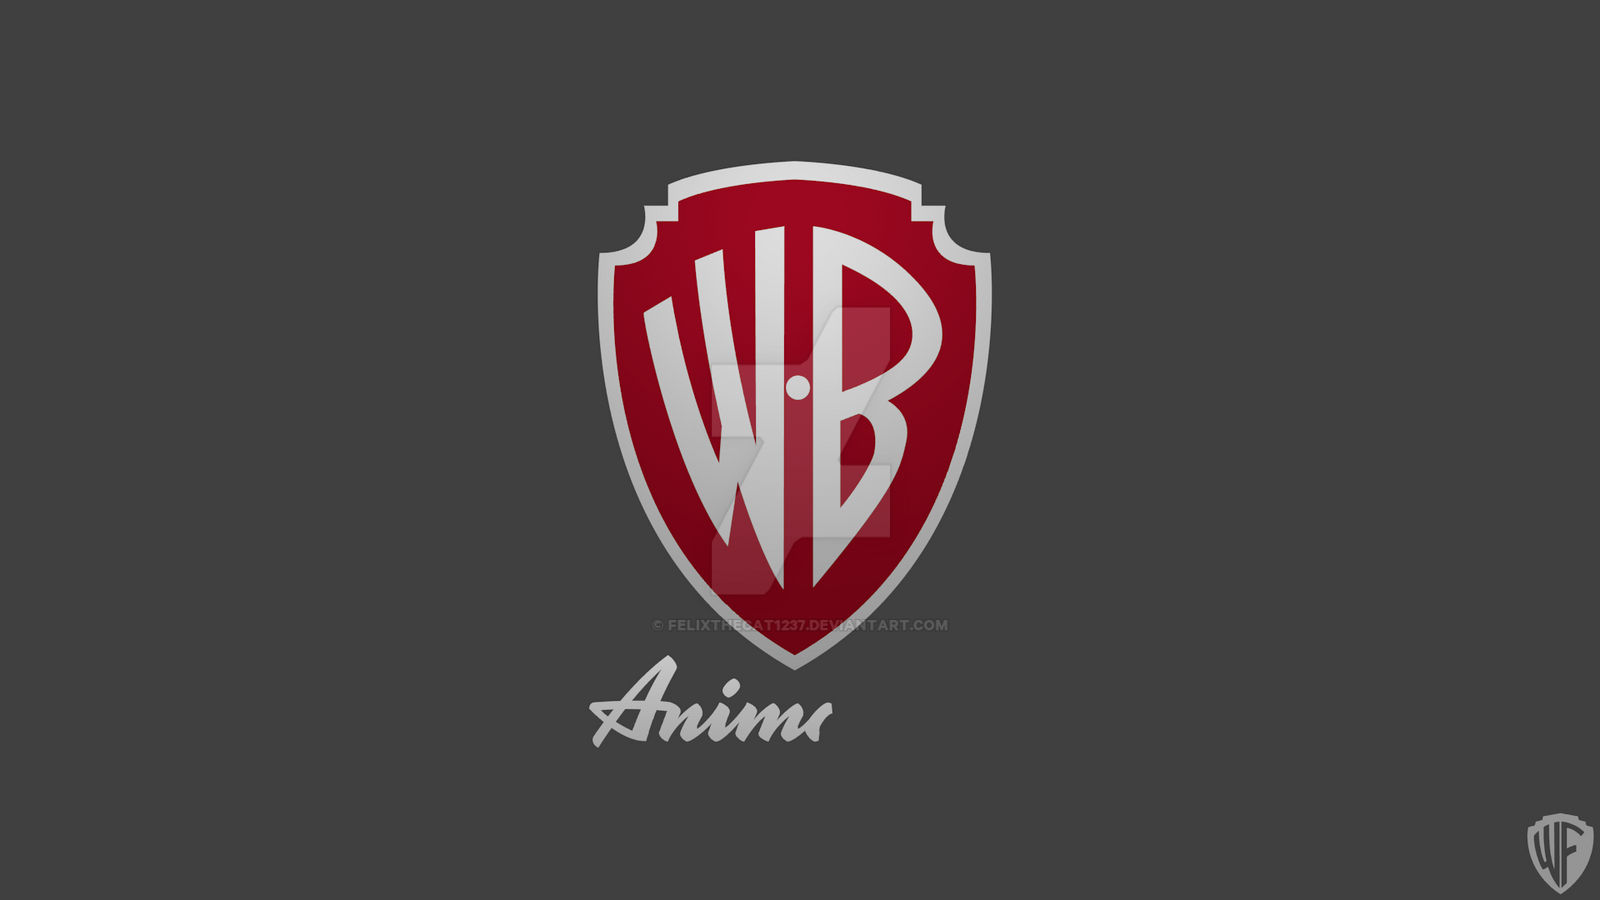 Warner Bros Animation 2015 Logo remake  #1 by Felixthecat1237 on  DeviantArt